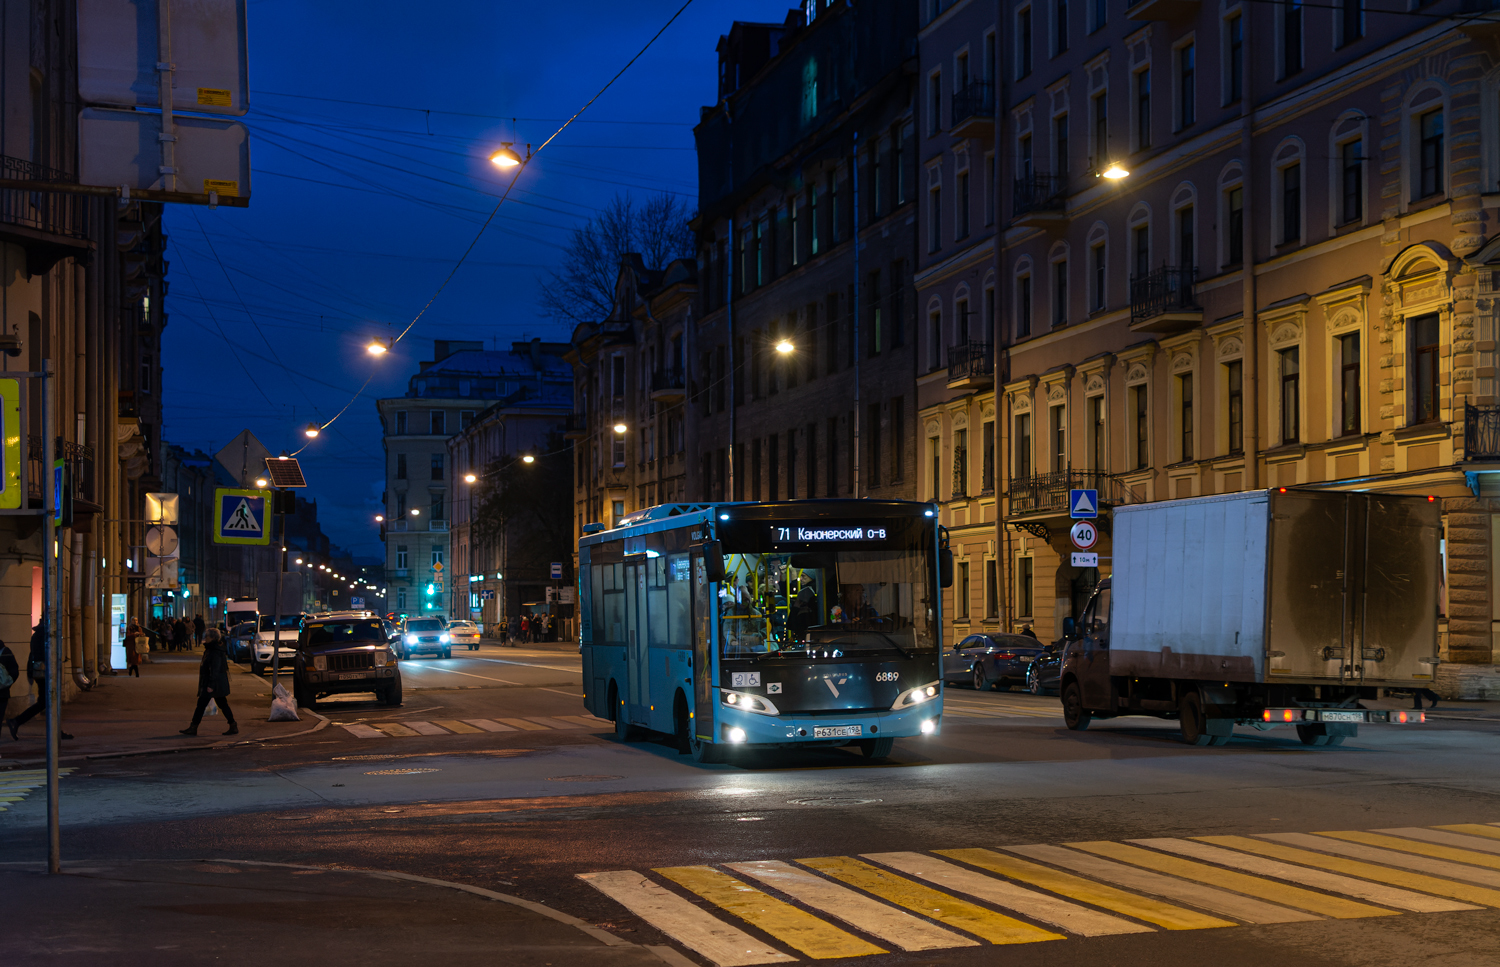 Санкт-Петербург, Volgabus-4298.G4 (LNG) № 6889